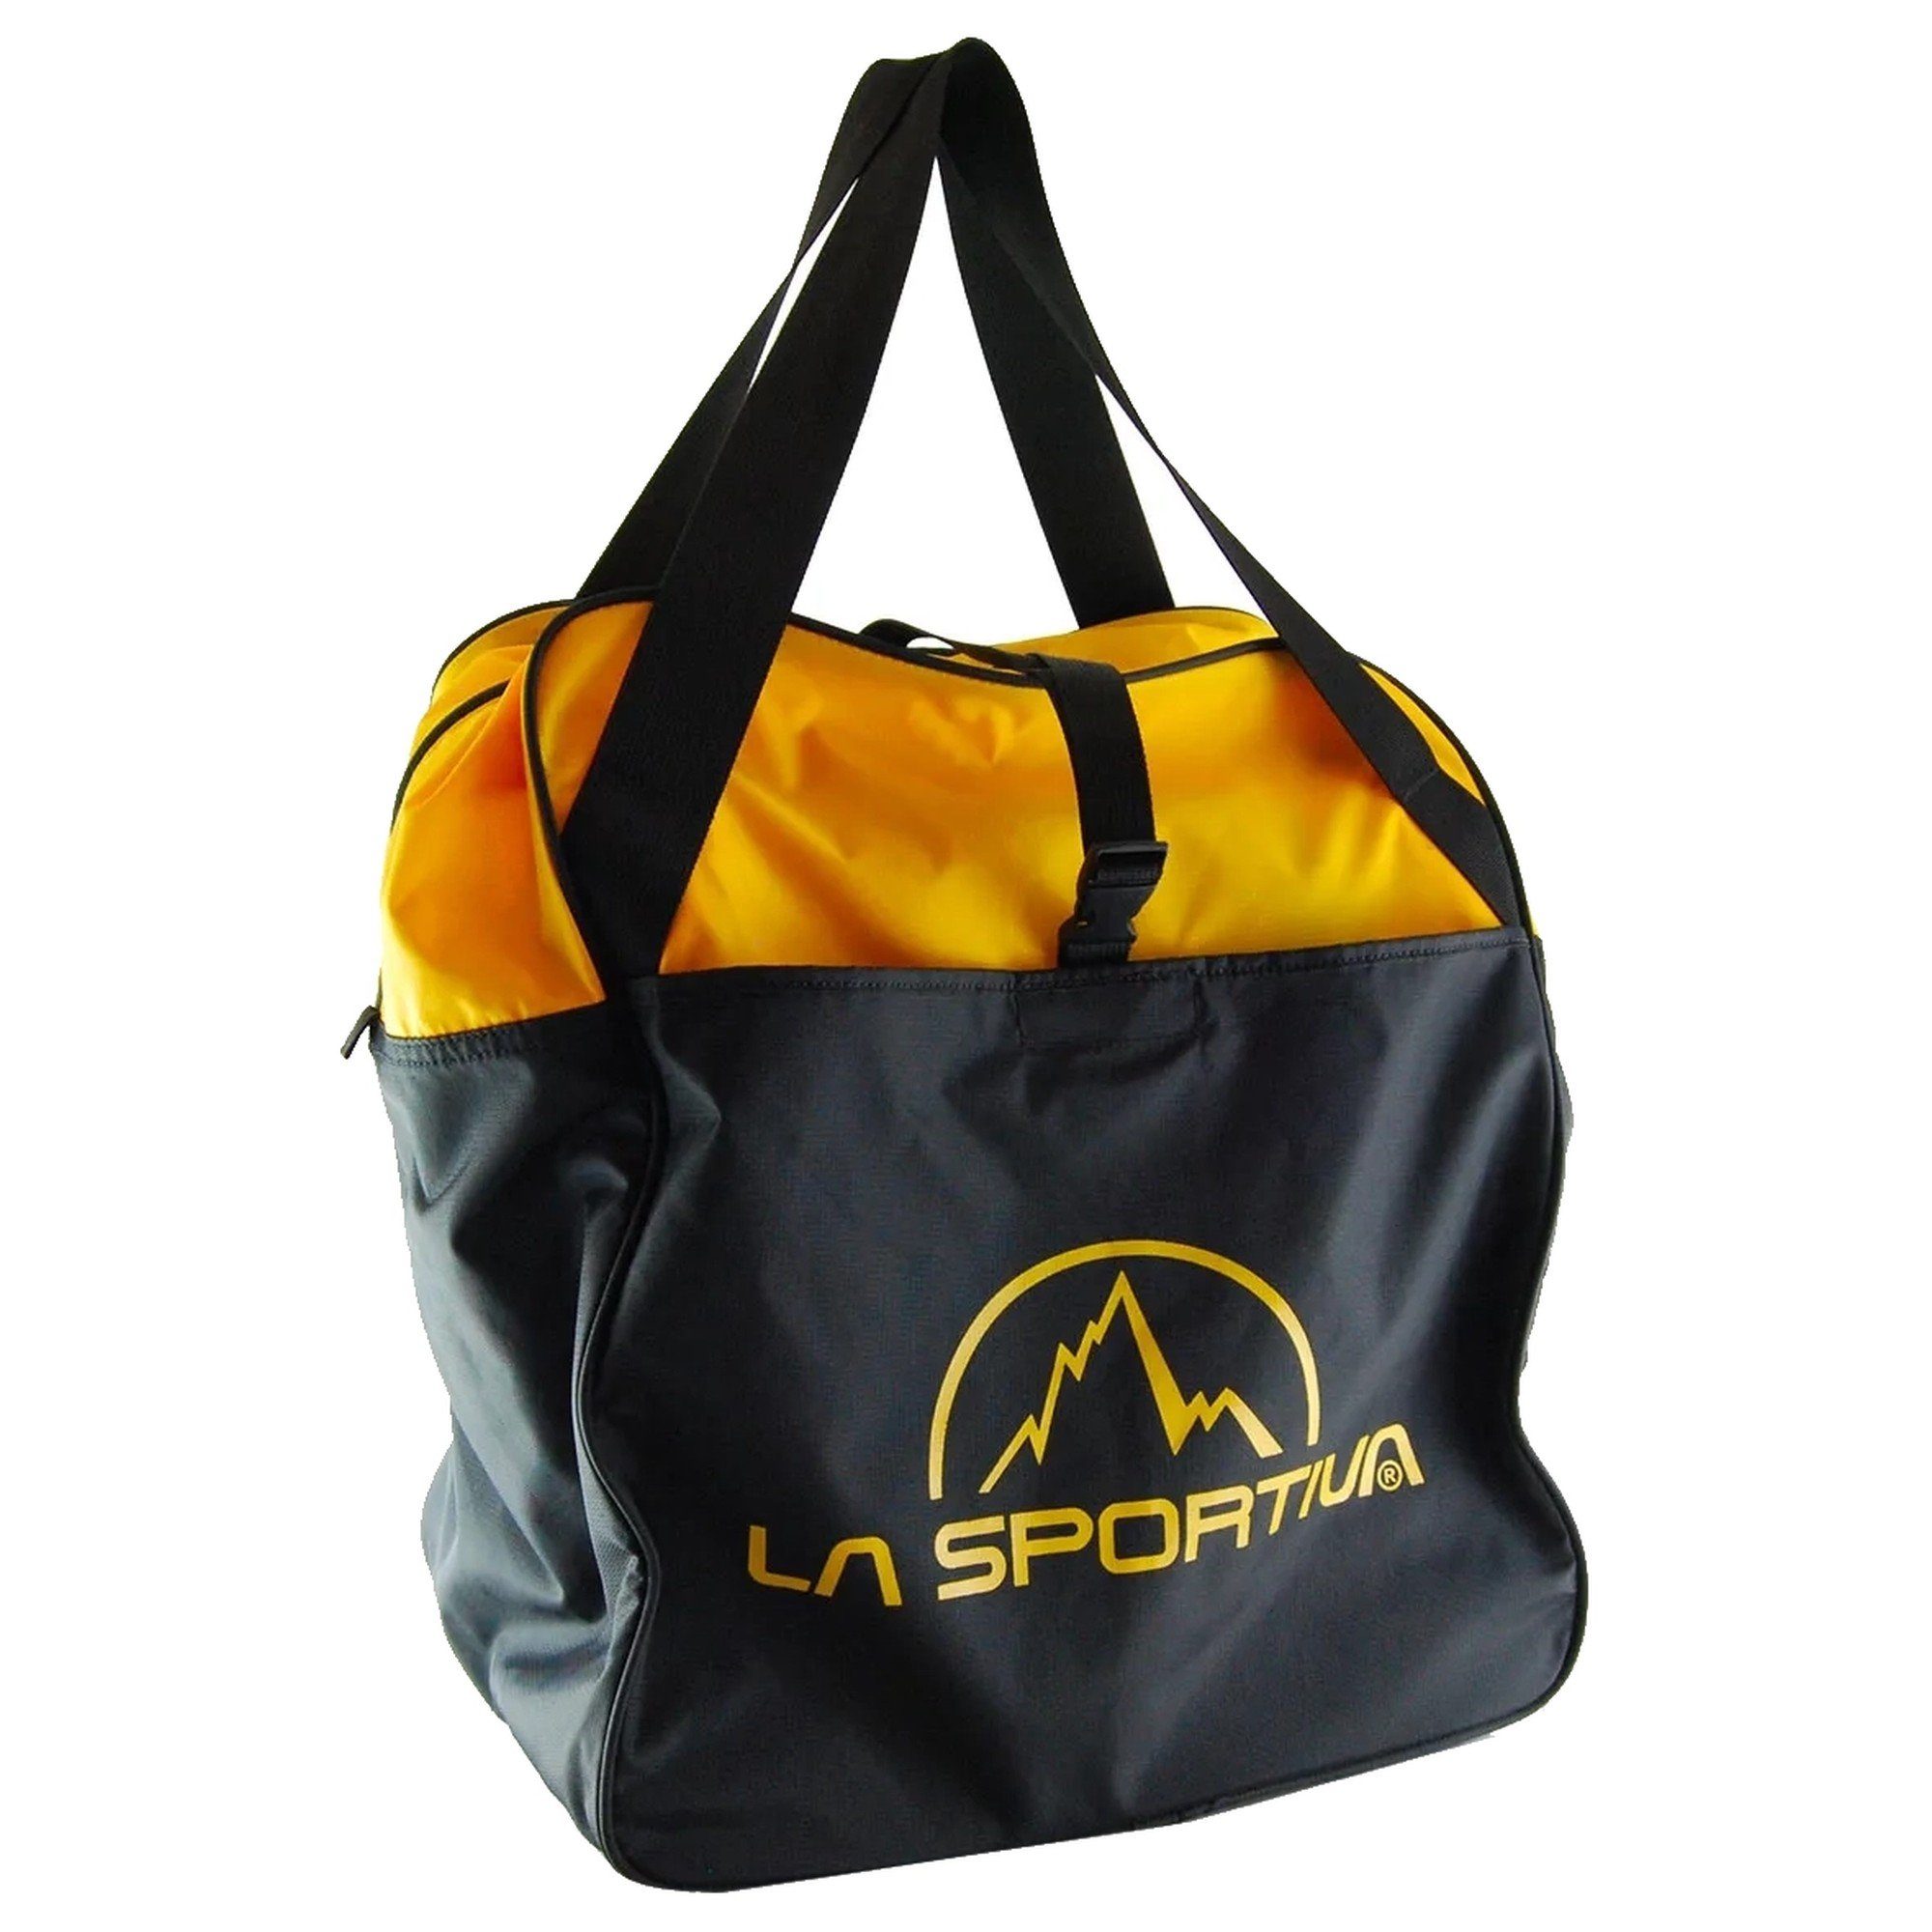 La Sportiva Sporttasche Skimo Bag - Tasche für Skischuhe